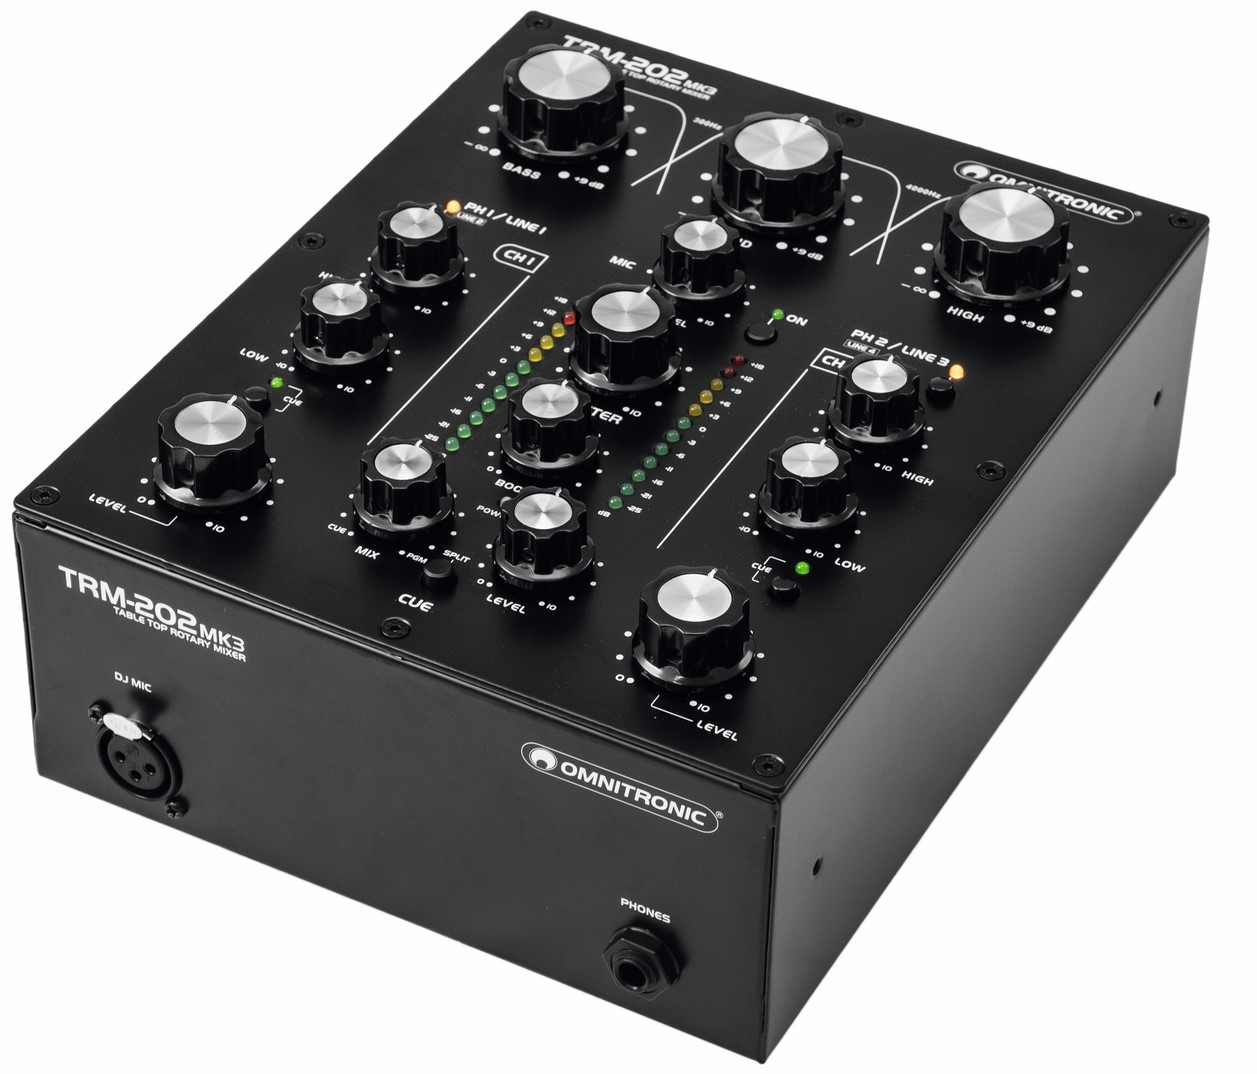 Omnitronic Trm-202mk3 2-channel Rotary Mixer - Mixer DJ - Variation 1